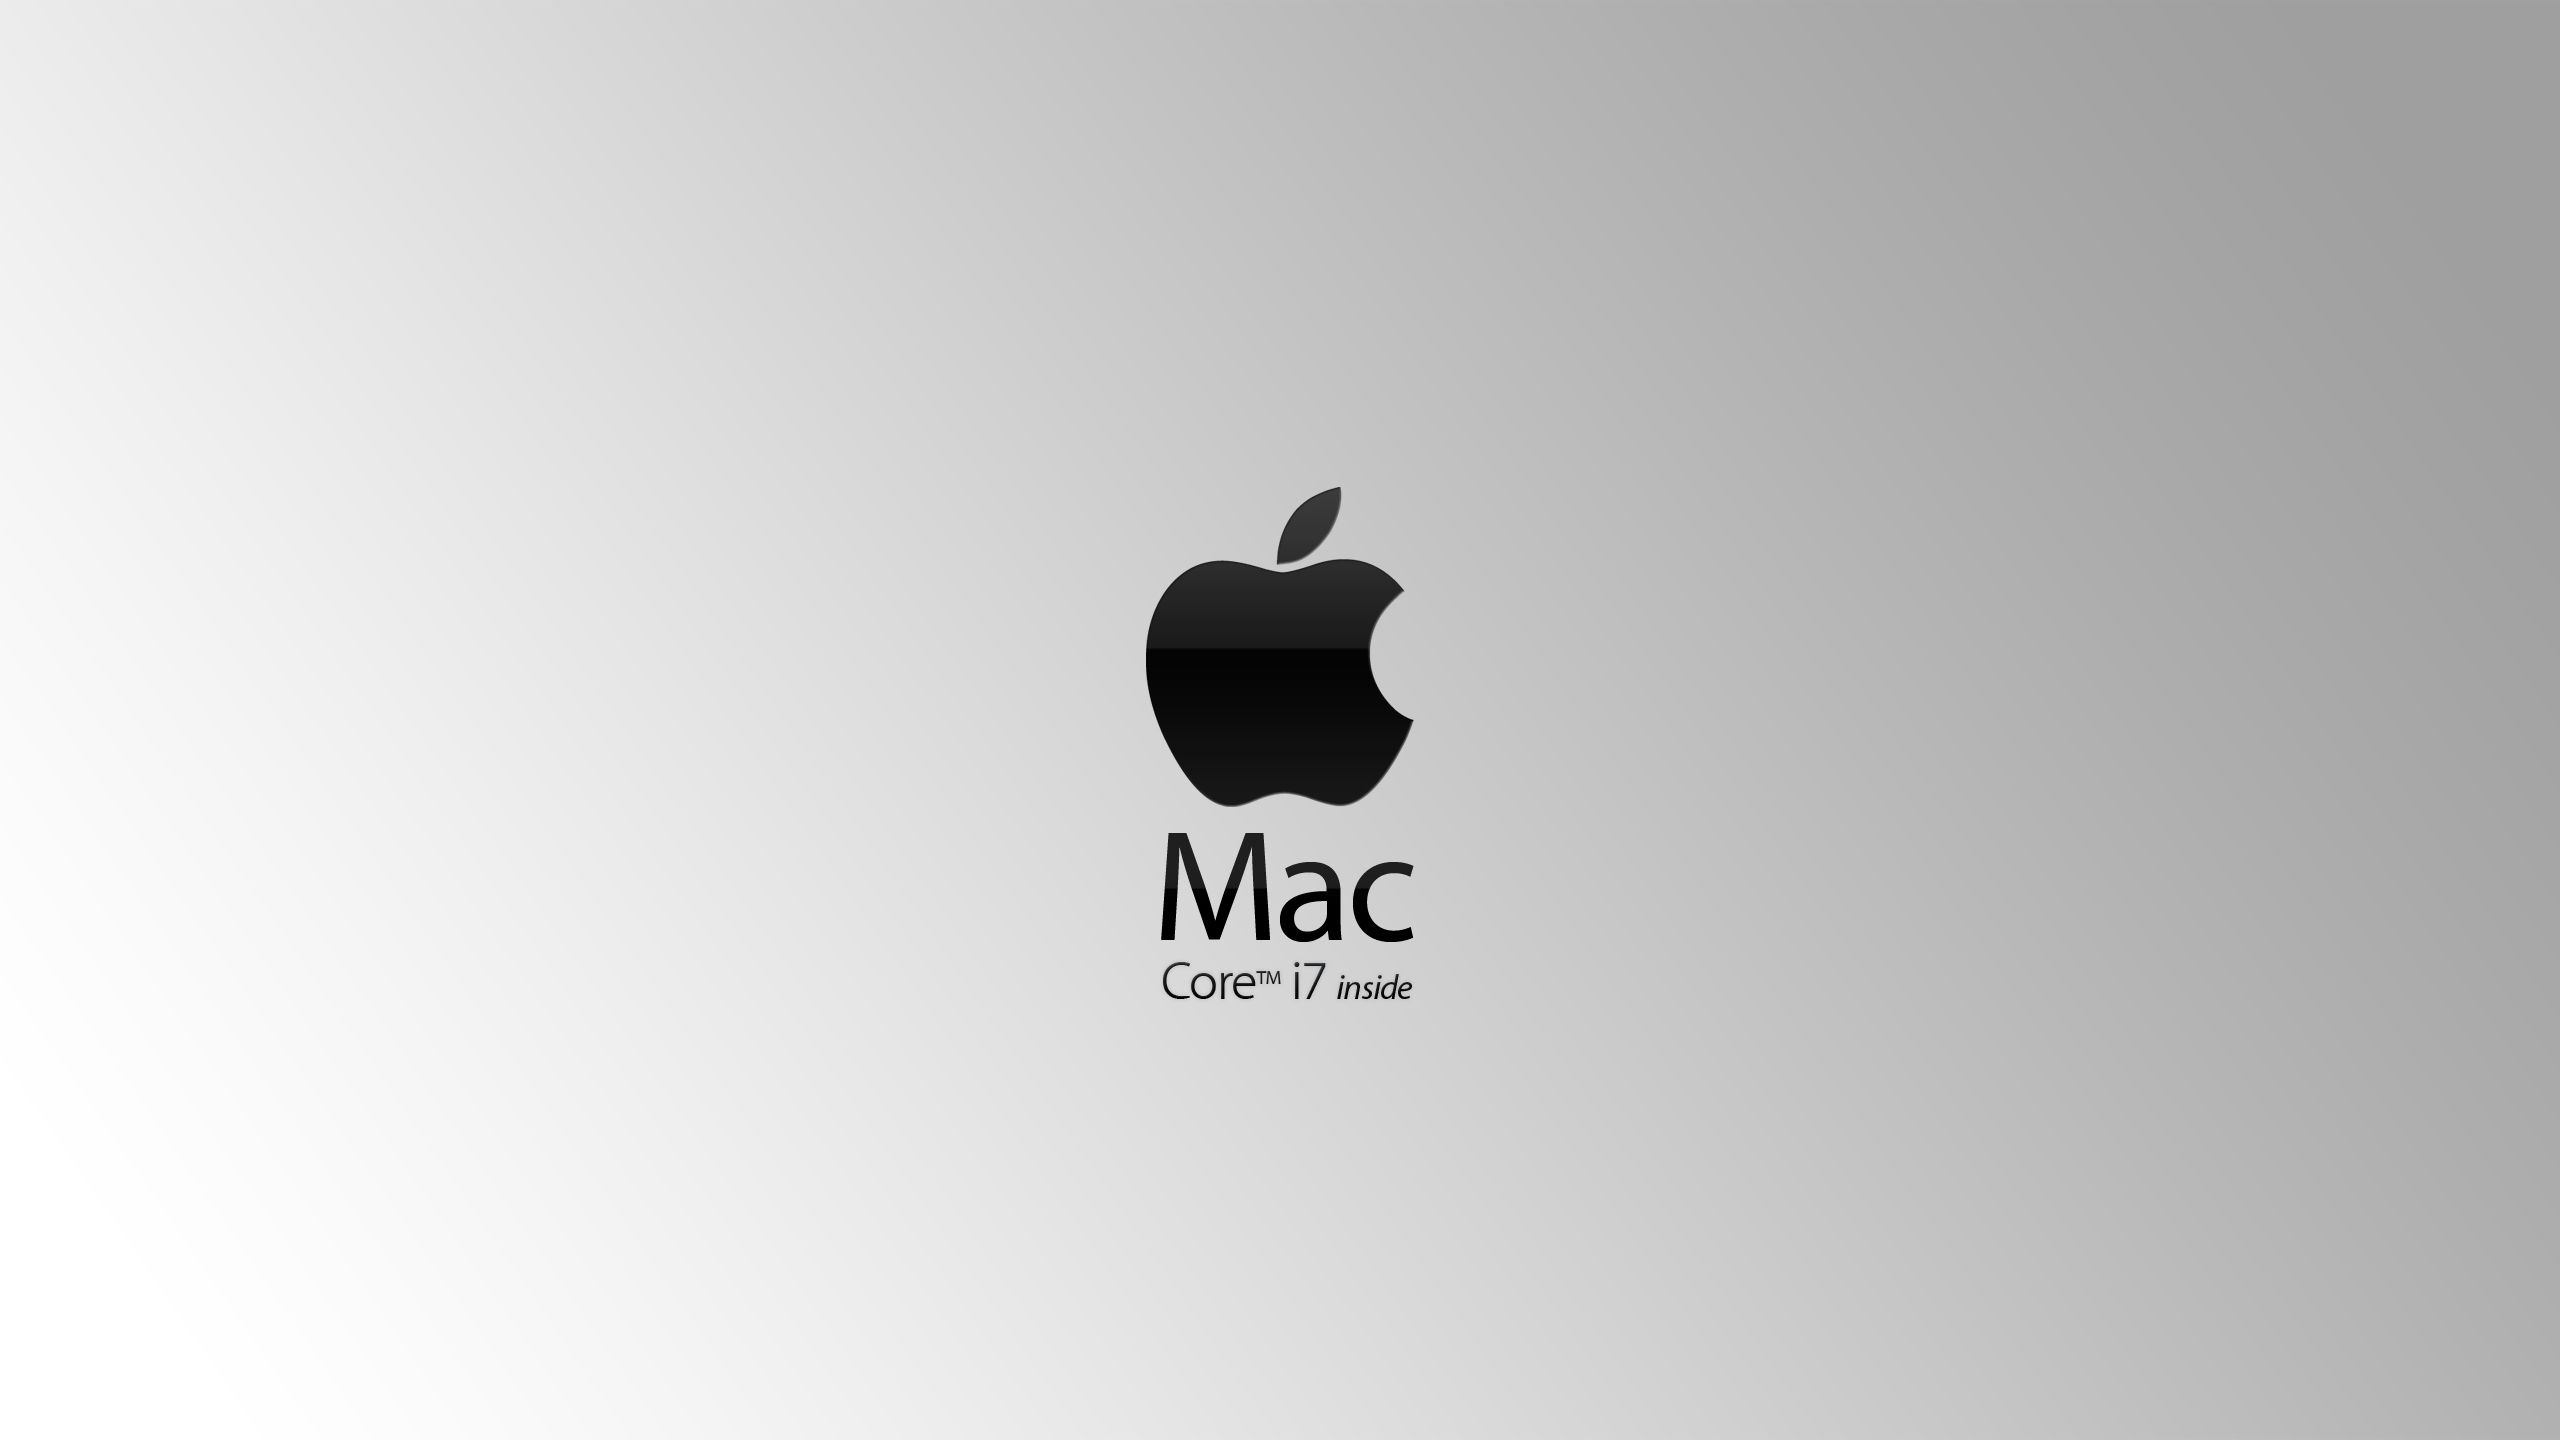 download the new for mac DesktopOK x64 11.06